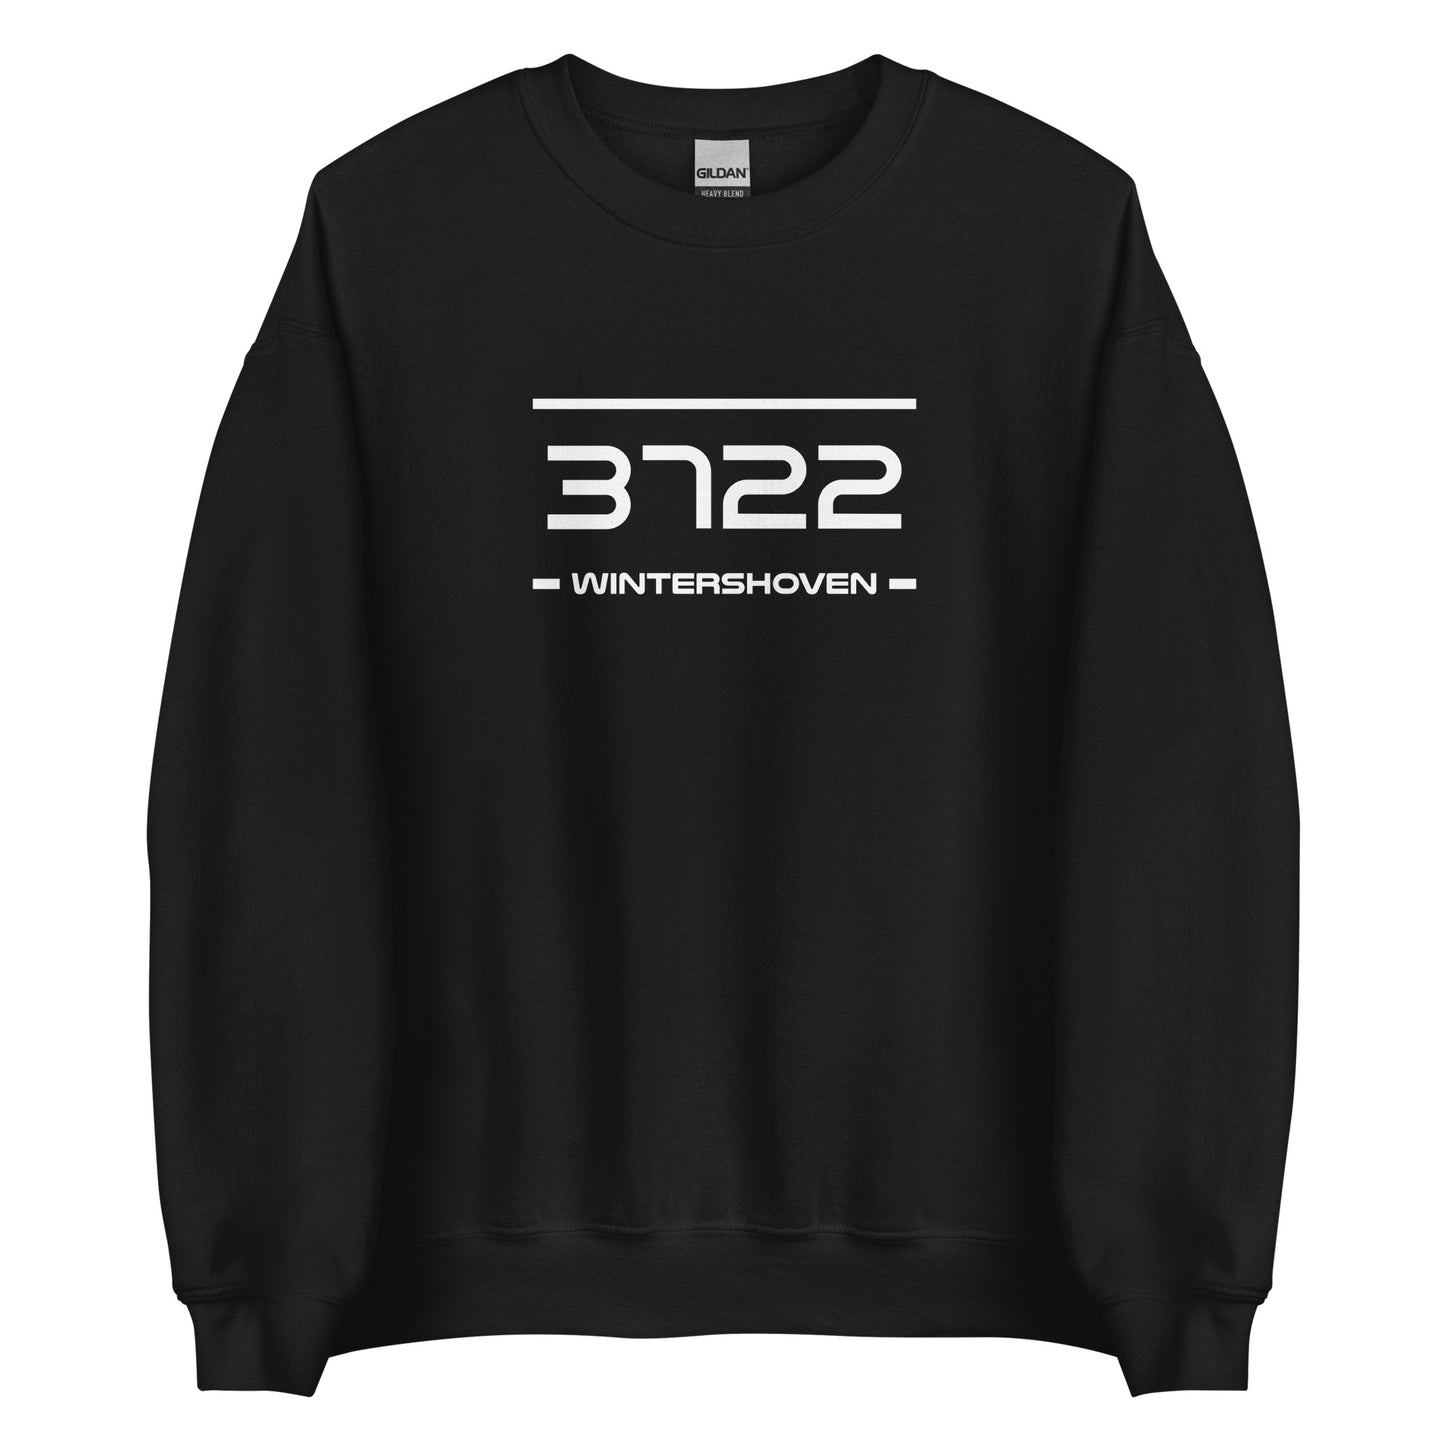 Sweater - 3722 - Wintershoven (M/V)